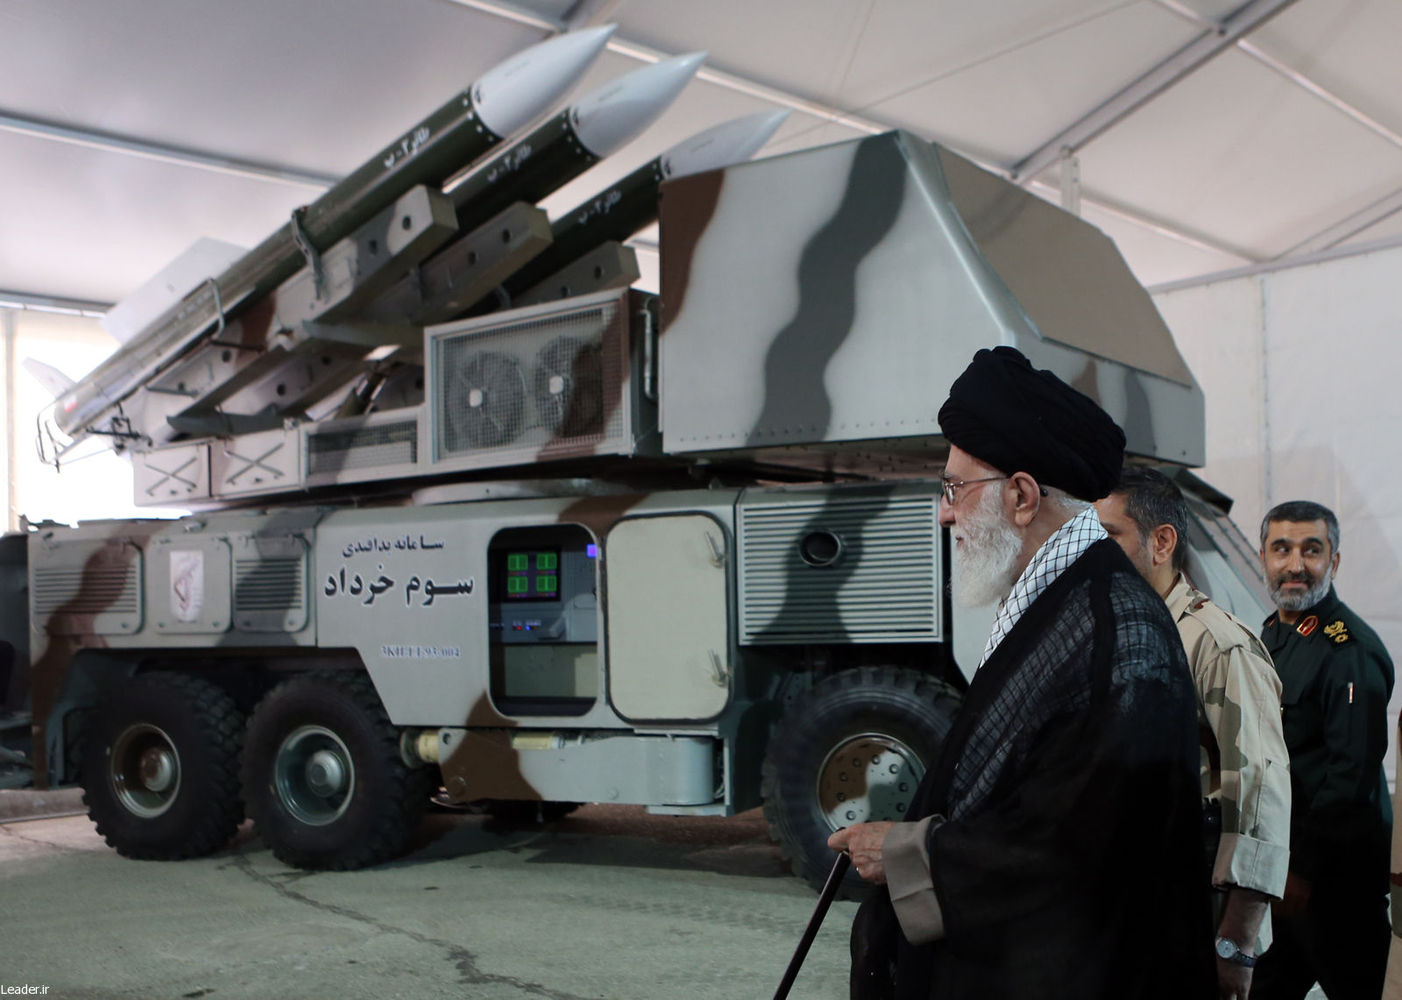 http://www.khamenei.ir/より。写っているのは国防システム「ホルダード月3日」